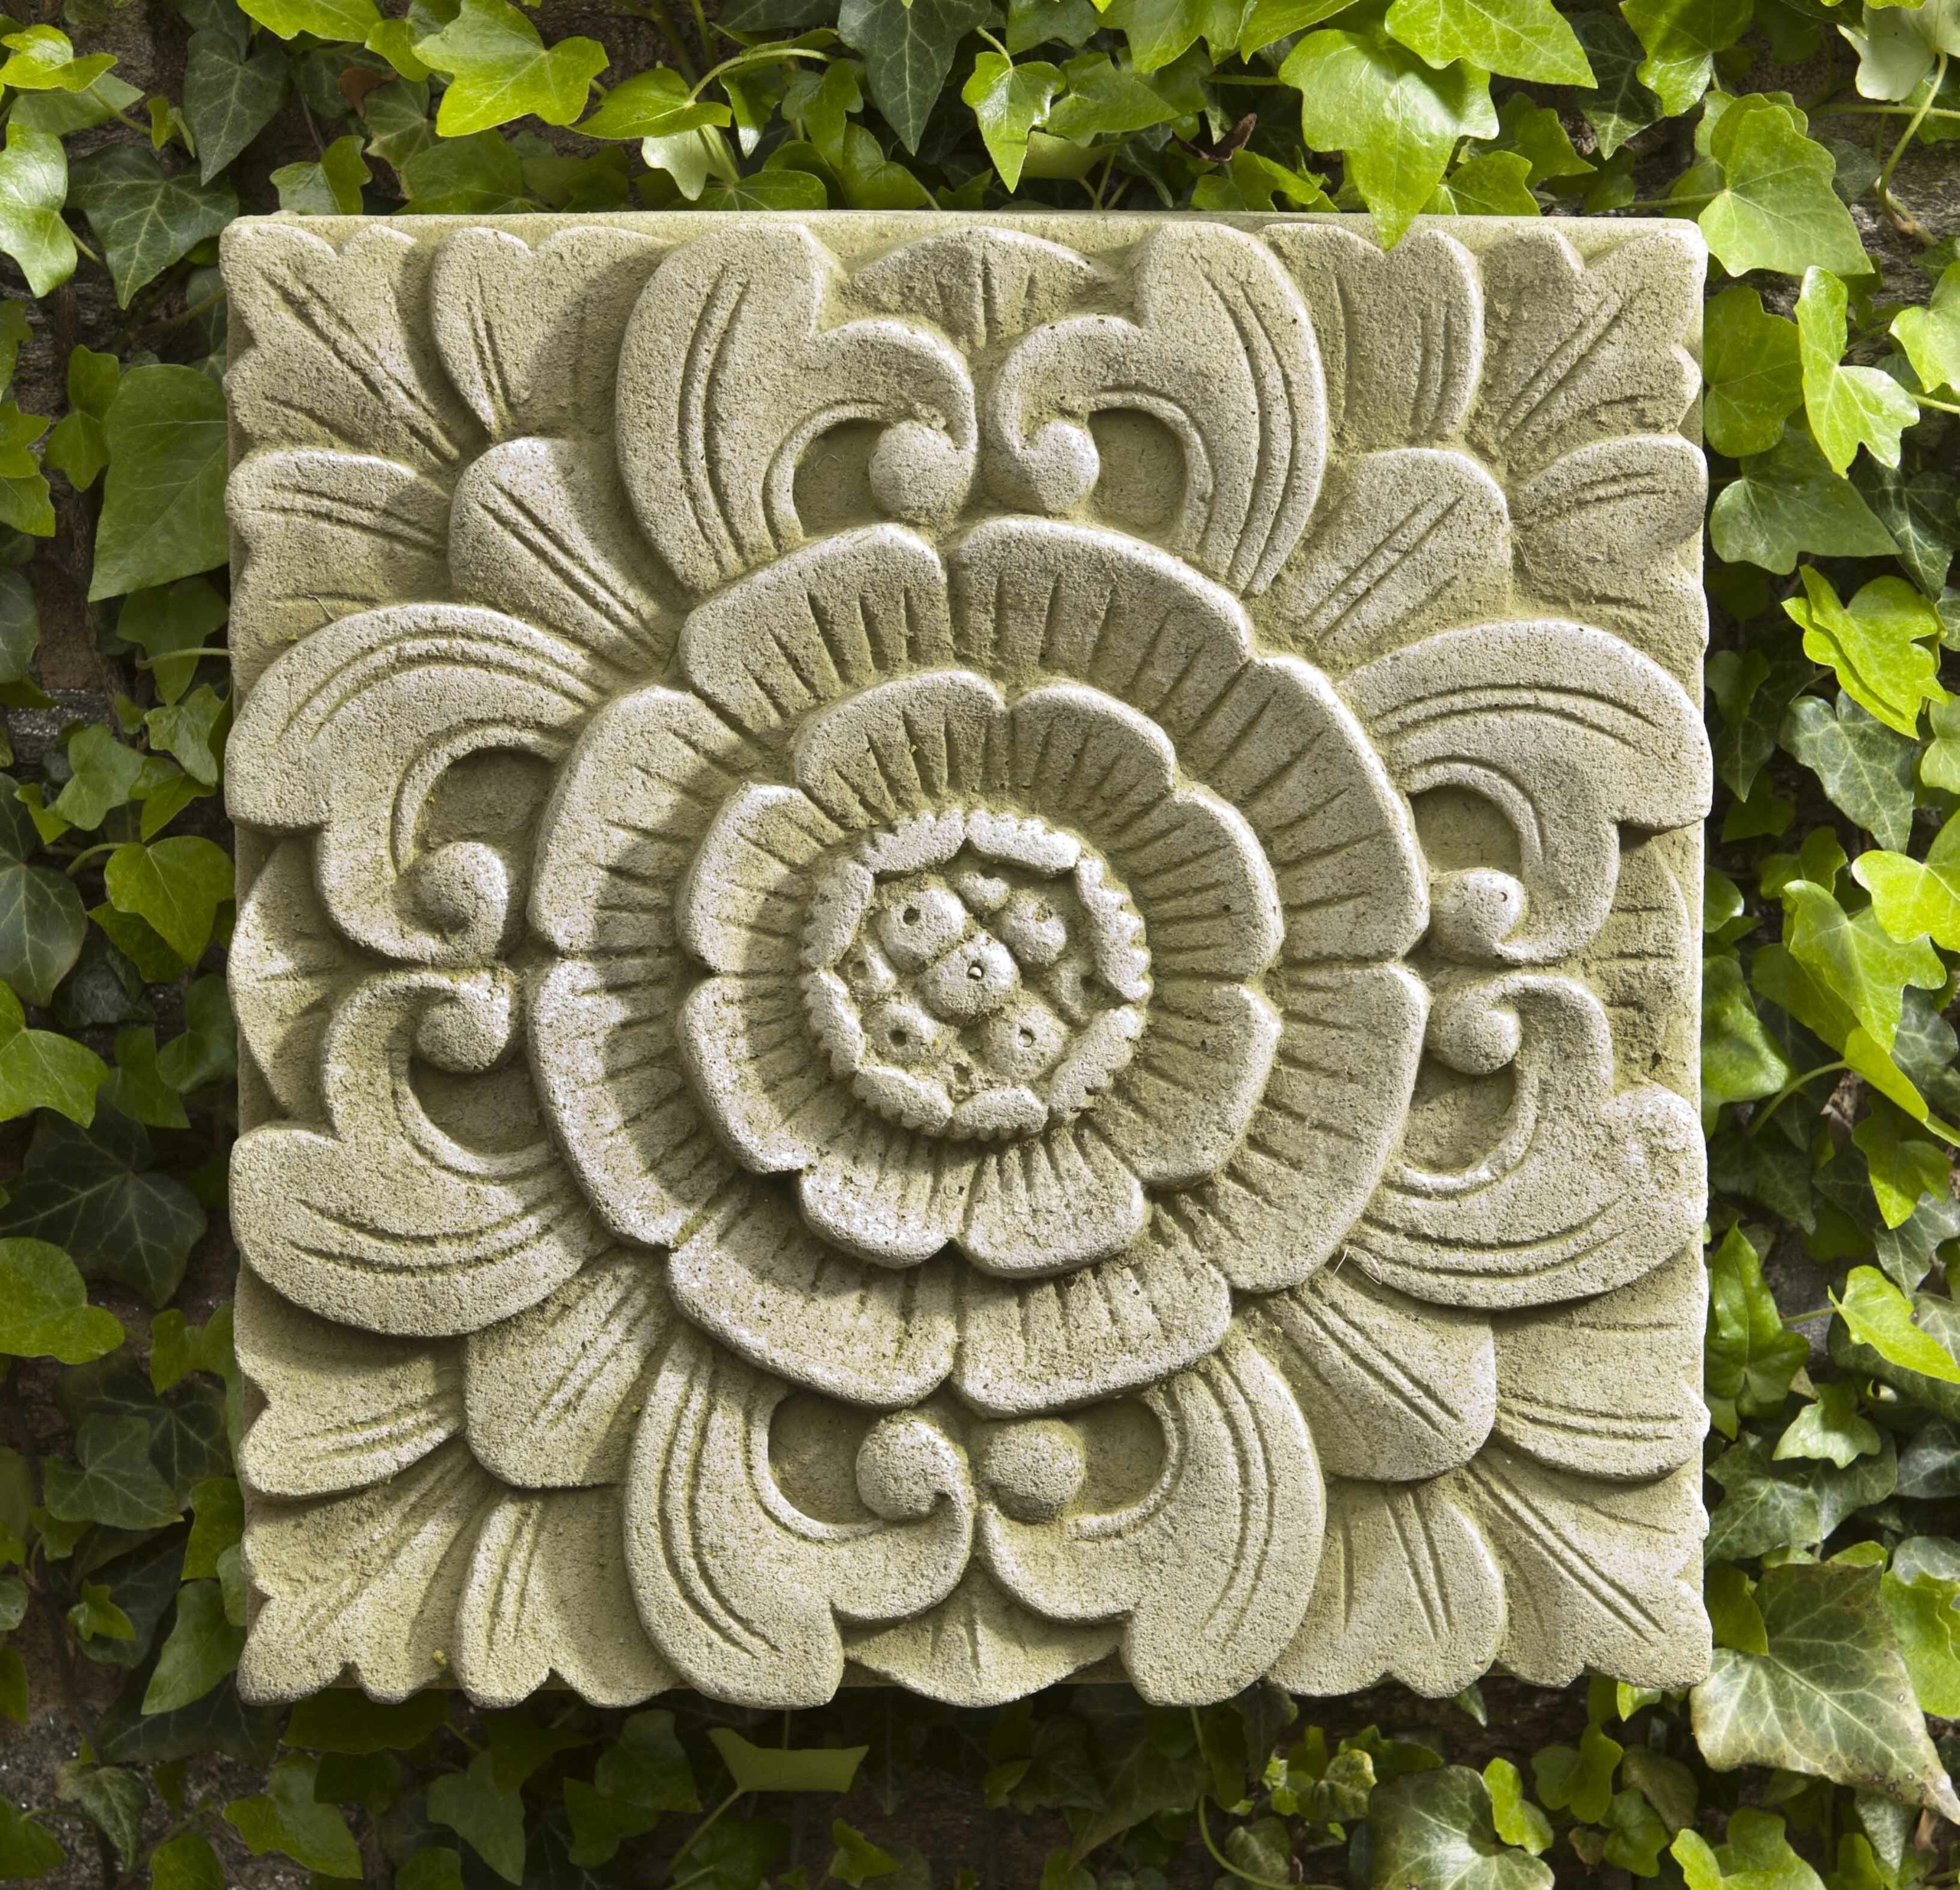 Eden cast stone outdoor wall art plaque traditional outdoor decor